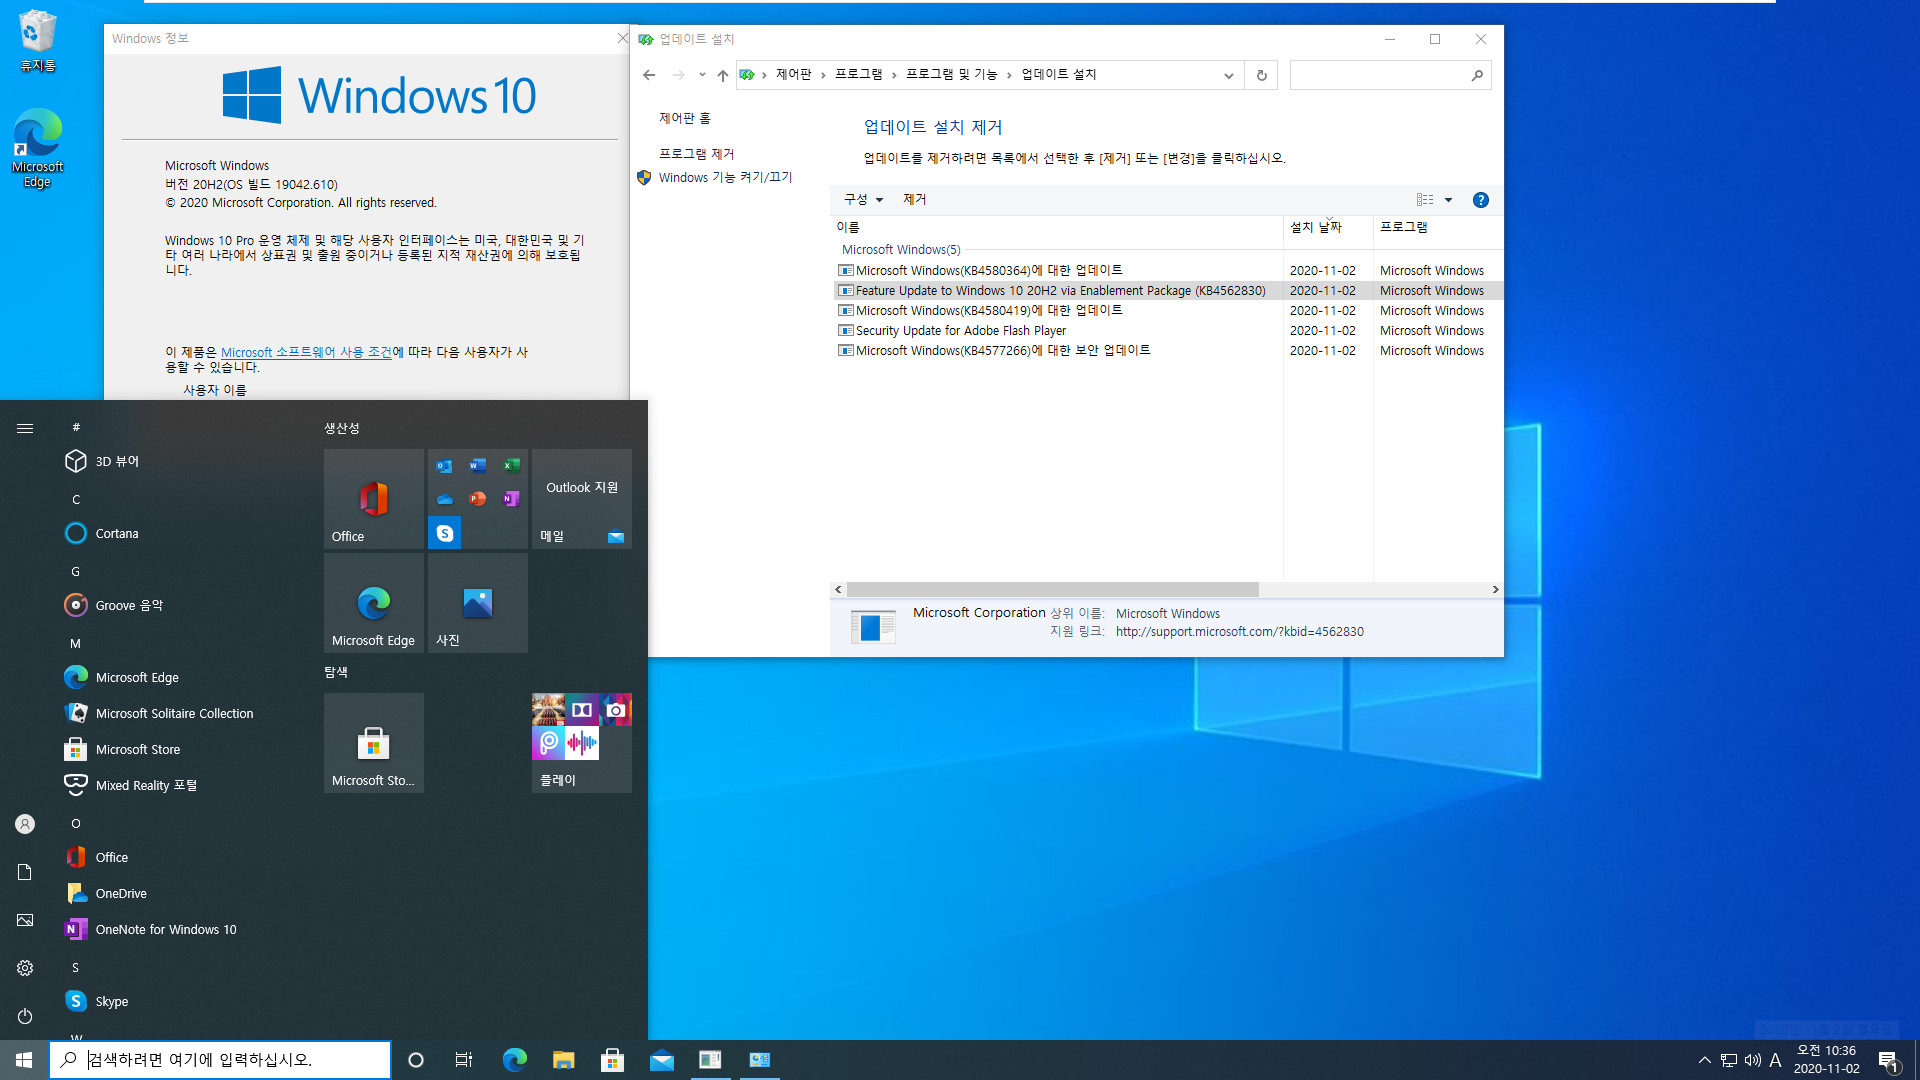 Windows 10 버전 20H2 기능 업데이트 KB4562830 폴더의 mum 파일들만 찾아서 설치하기.bat - 크로미엄 엣지 설치하지 않고 버전 20H2만 설치하기 테스트 - 뻘짓했네요 2020-11-02_103608.jpg